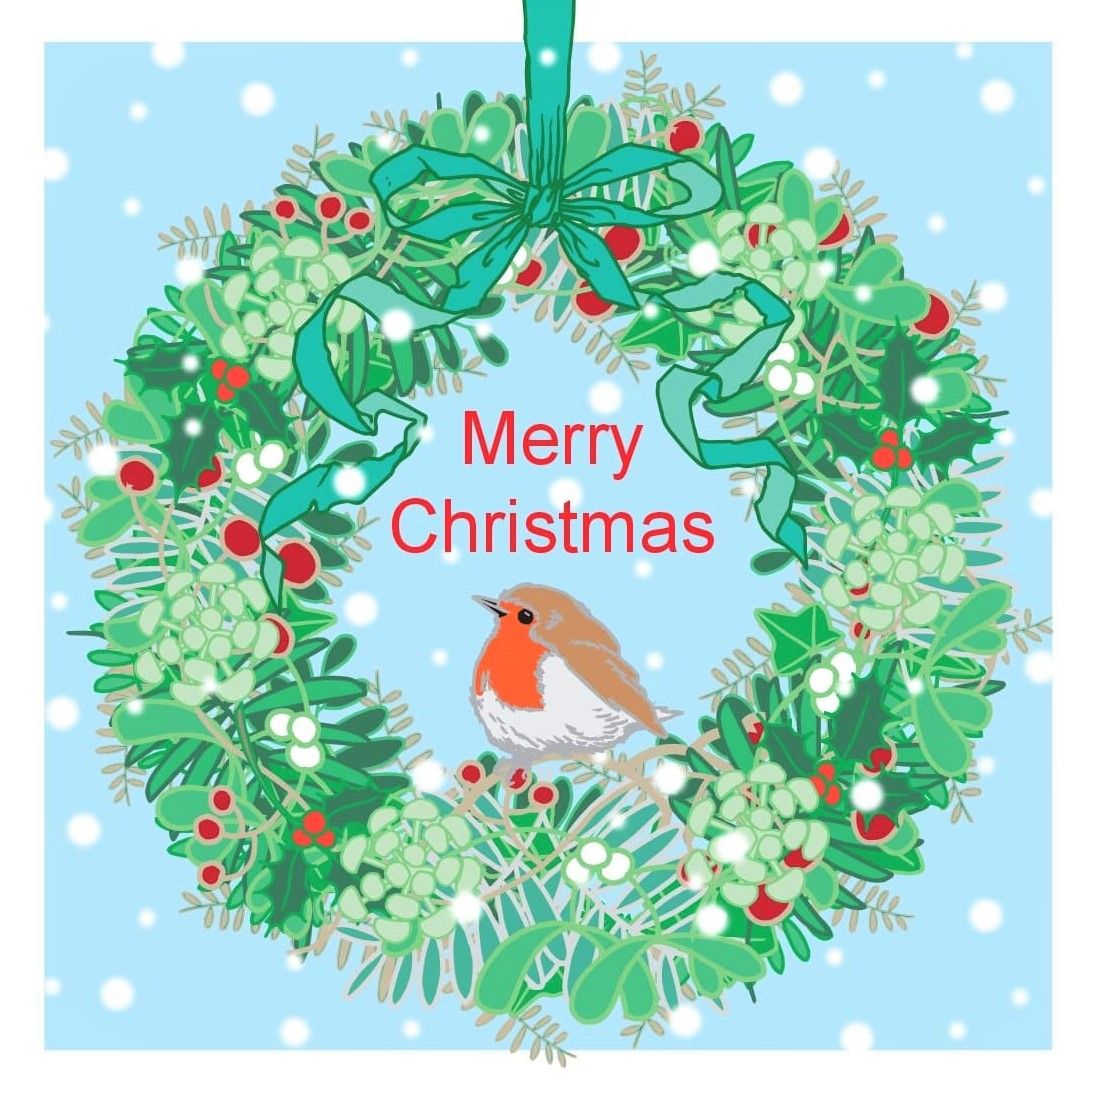 Winter Wreath & Robin Umbellifer Charity Christmas Card